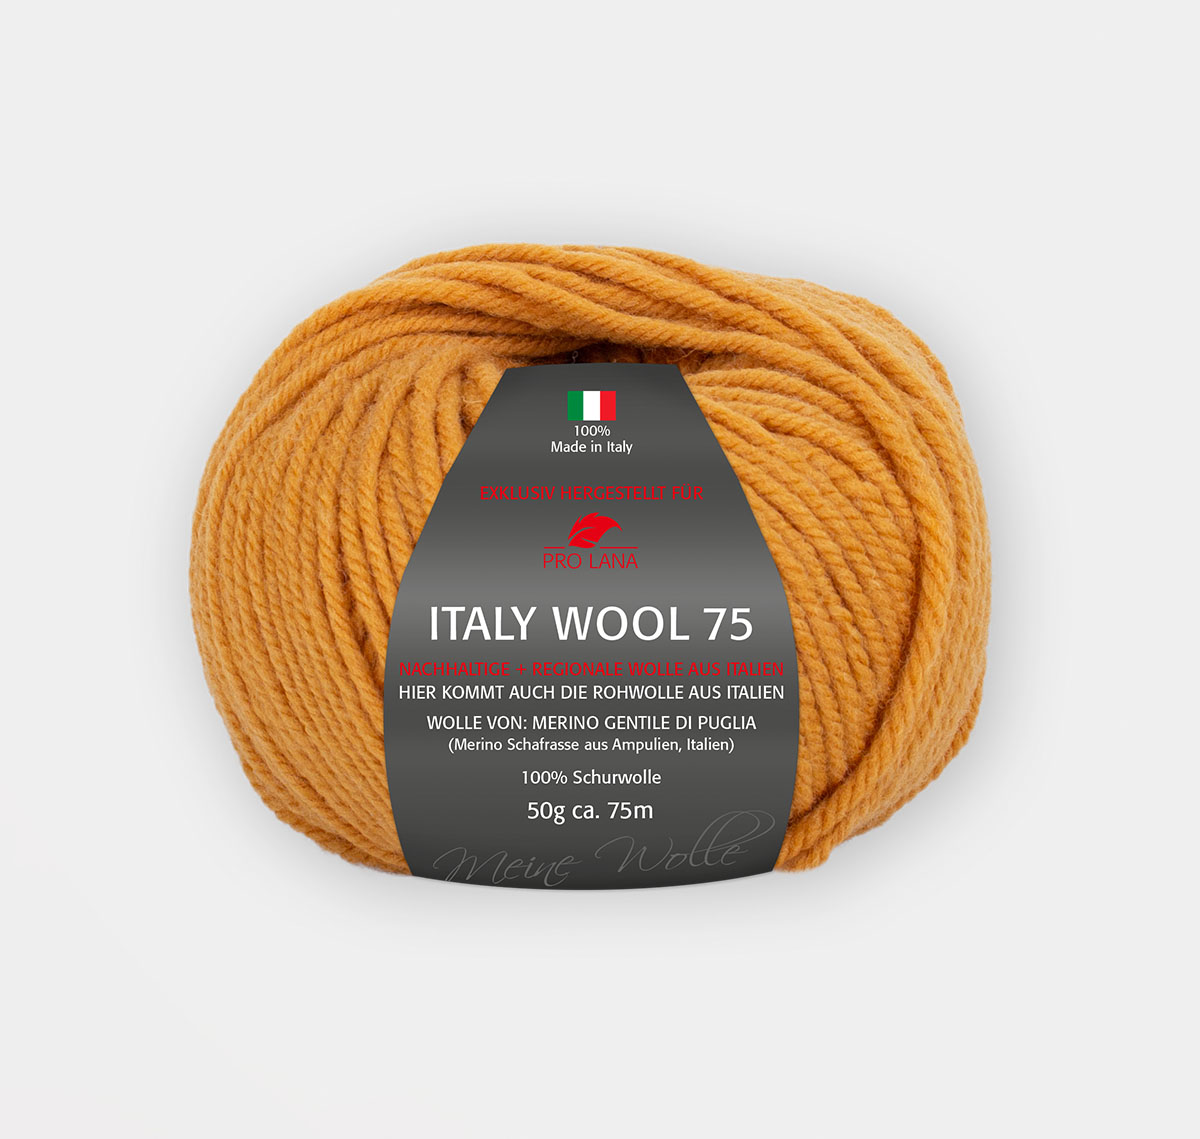 Italy Wool 75